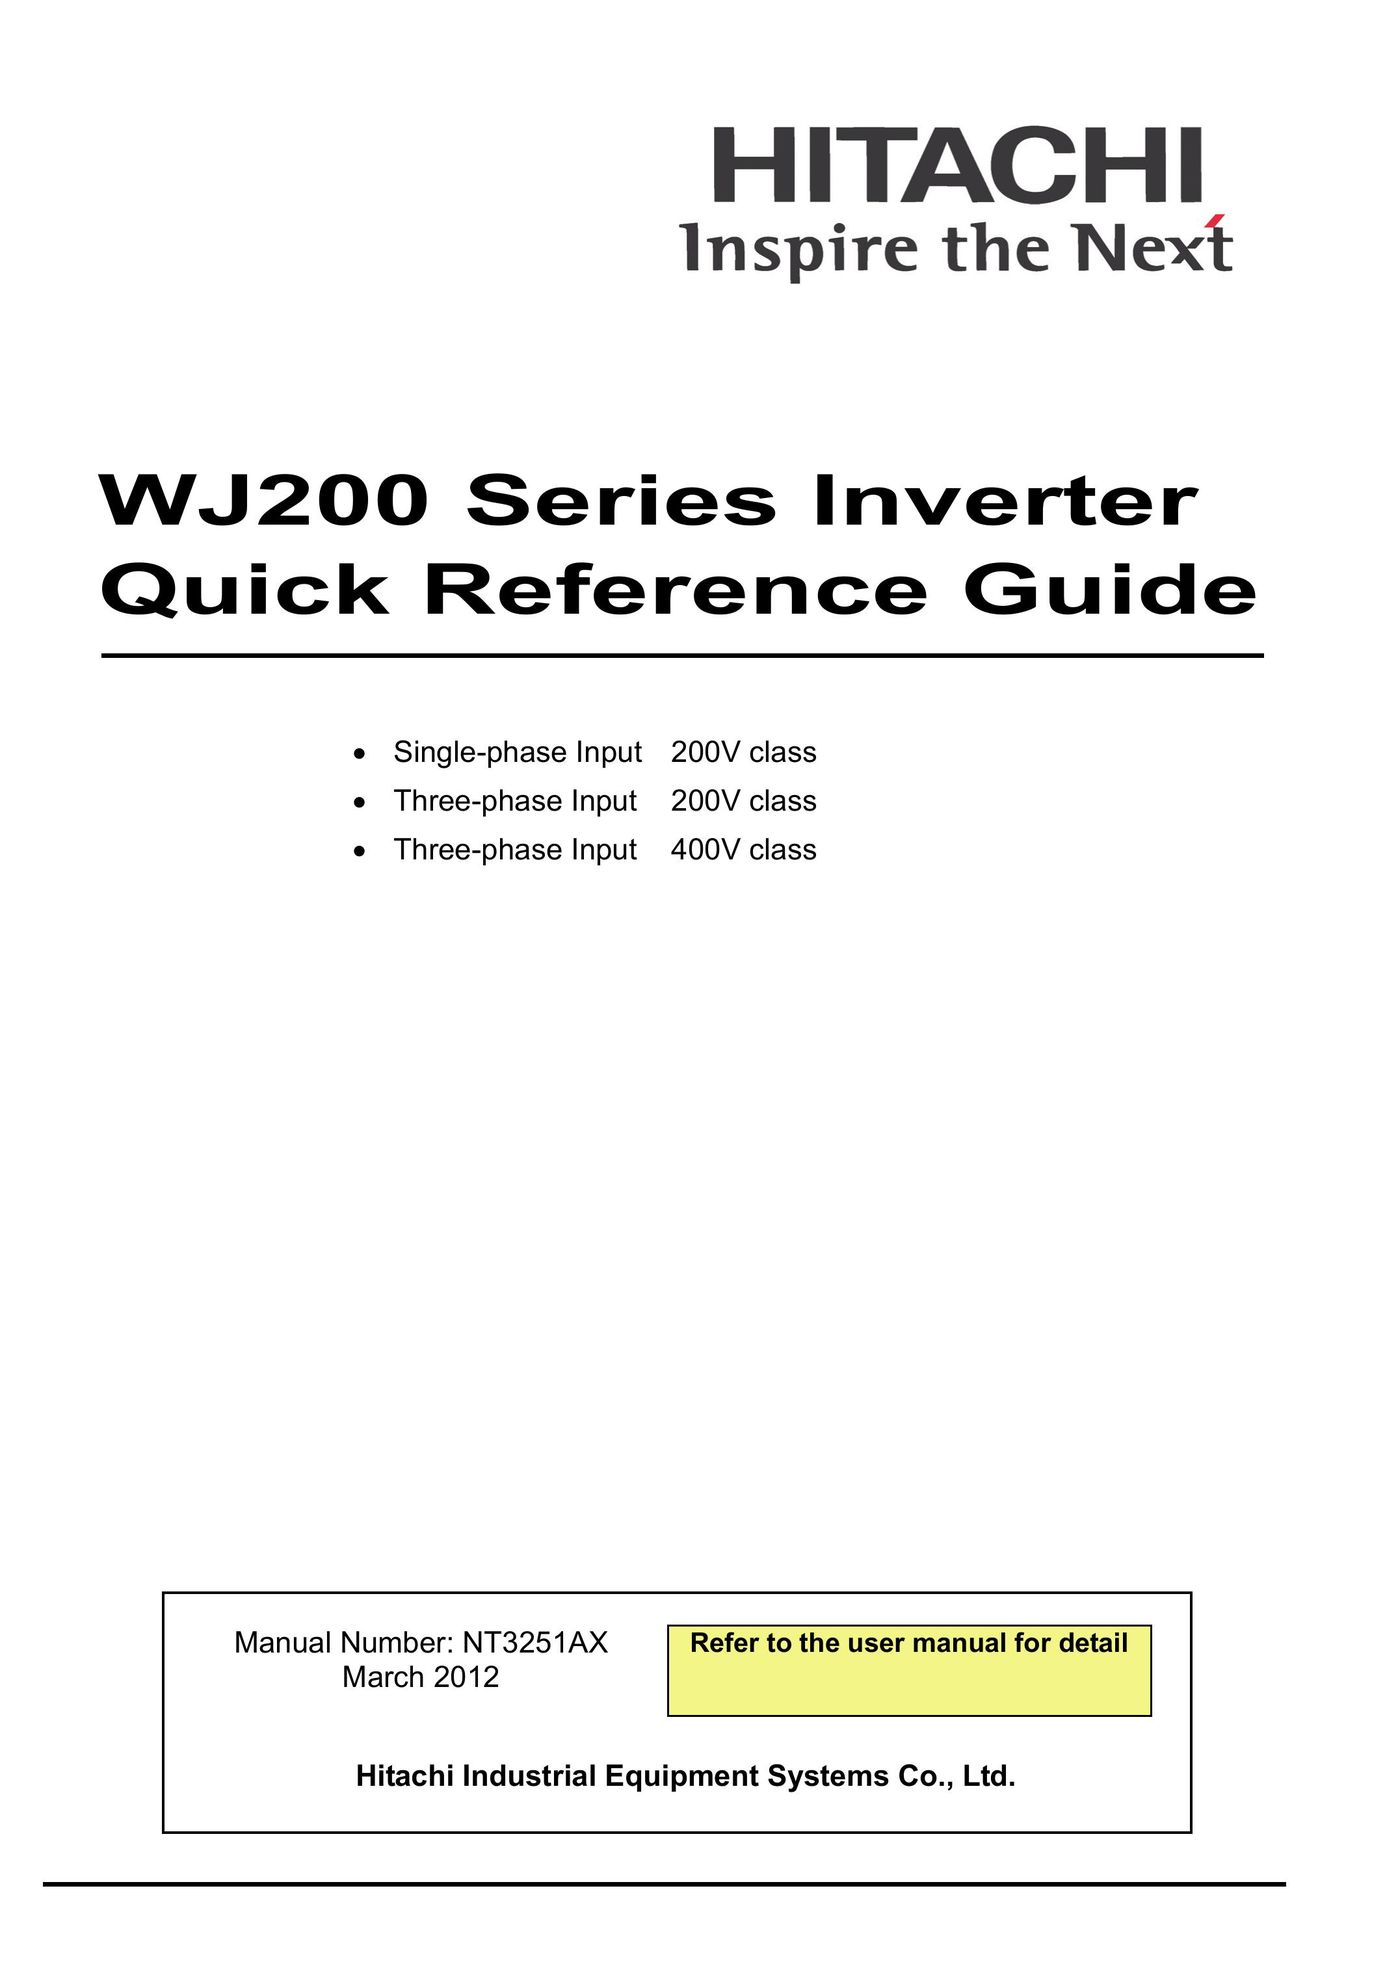 Hitachi hitachi series inverter Welding System User Manual